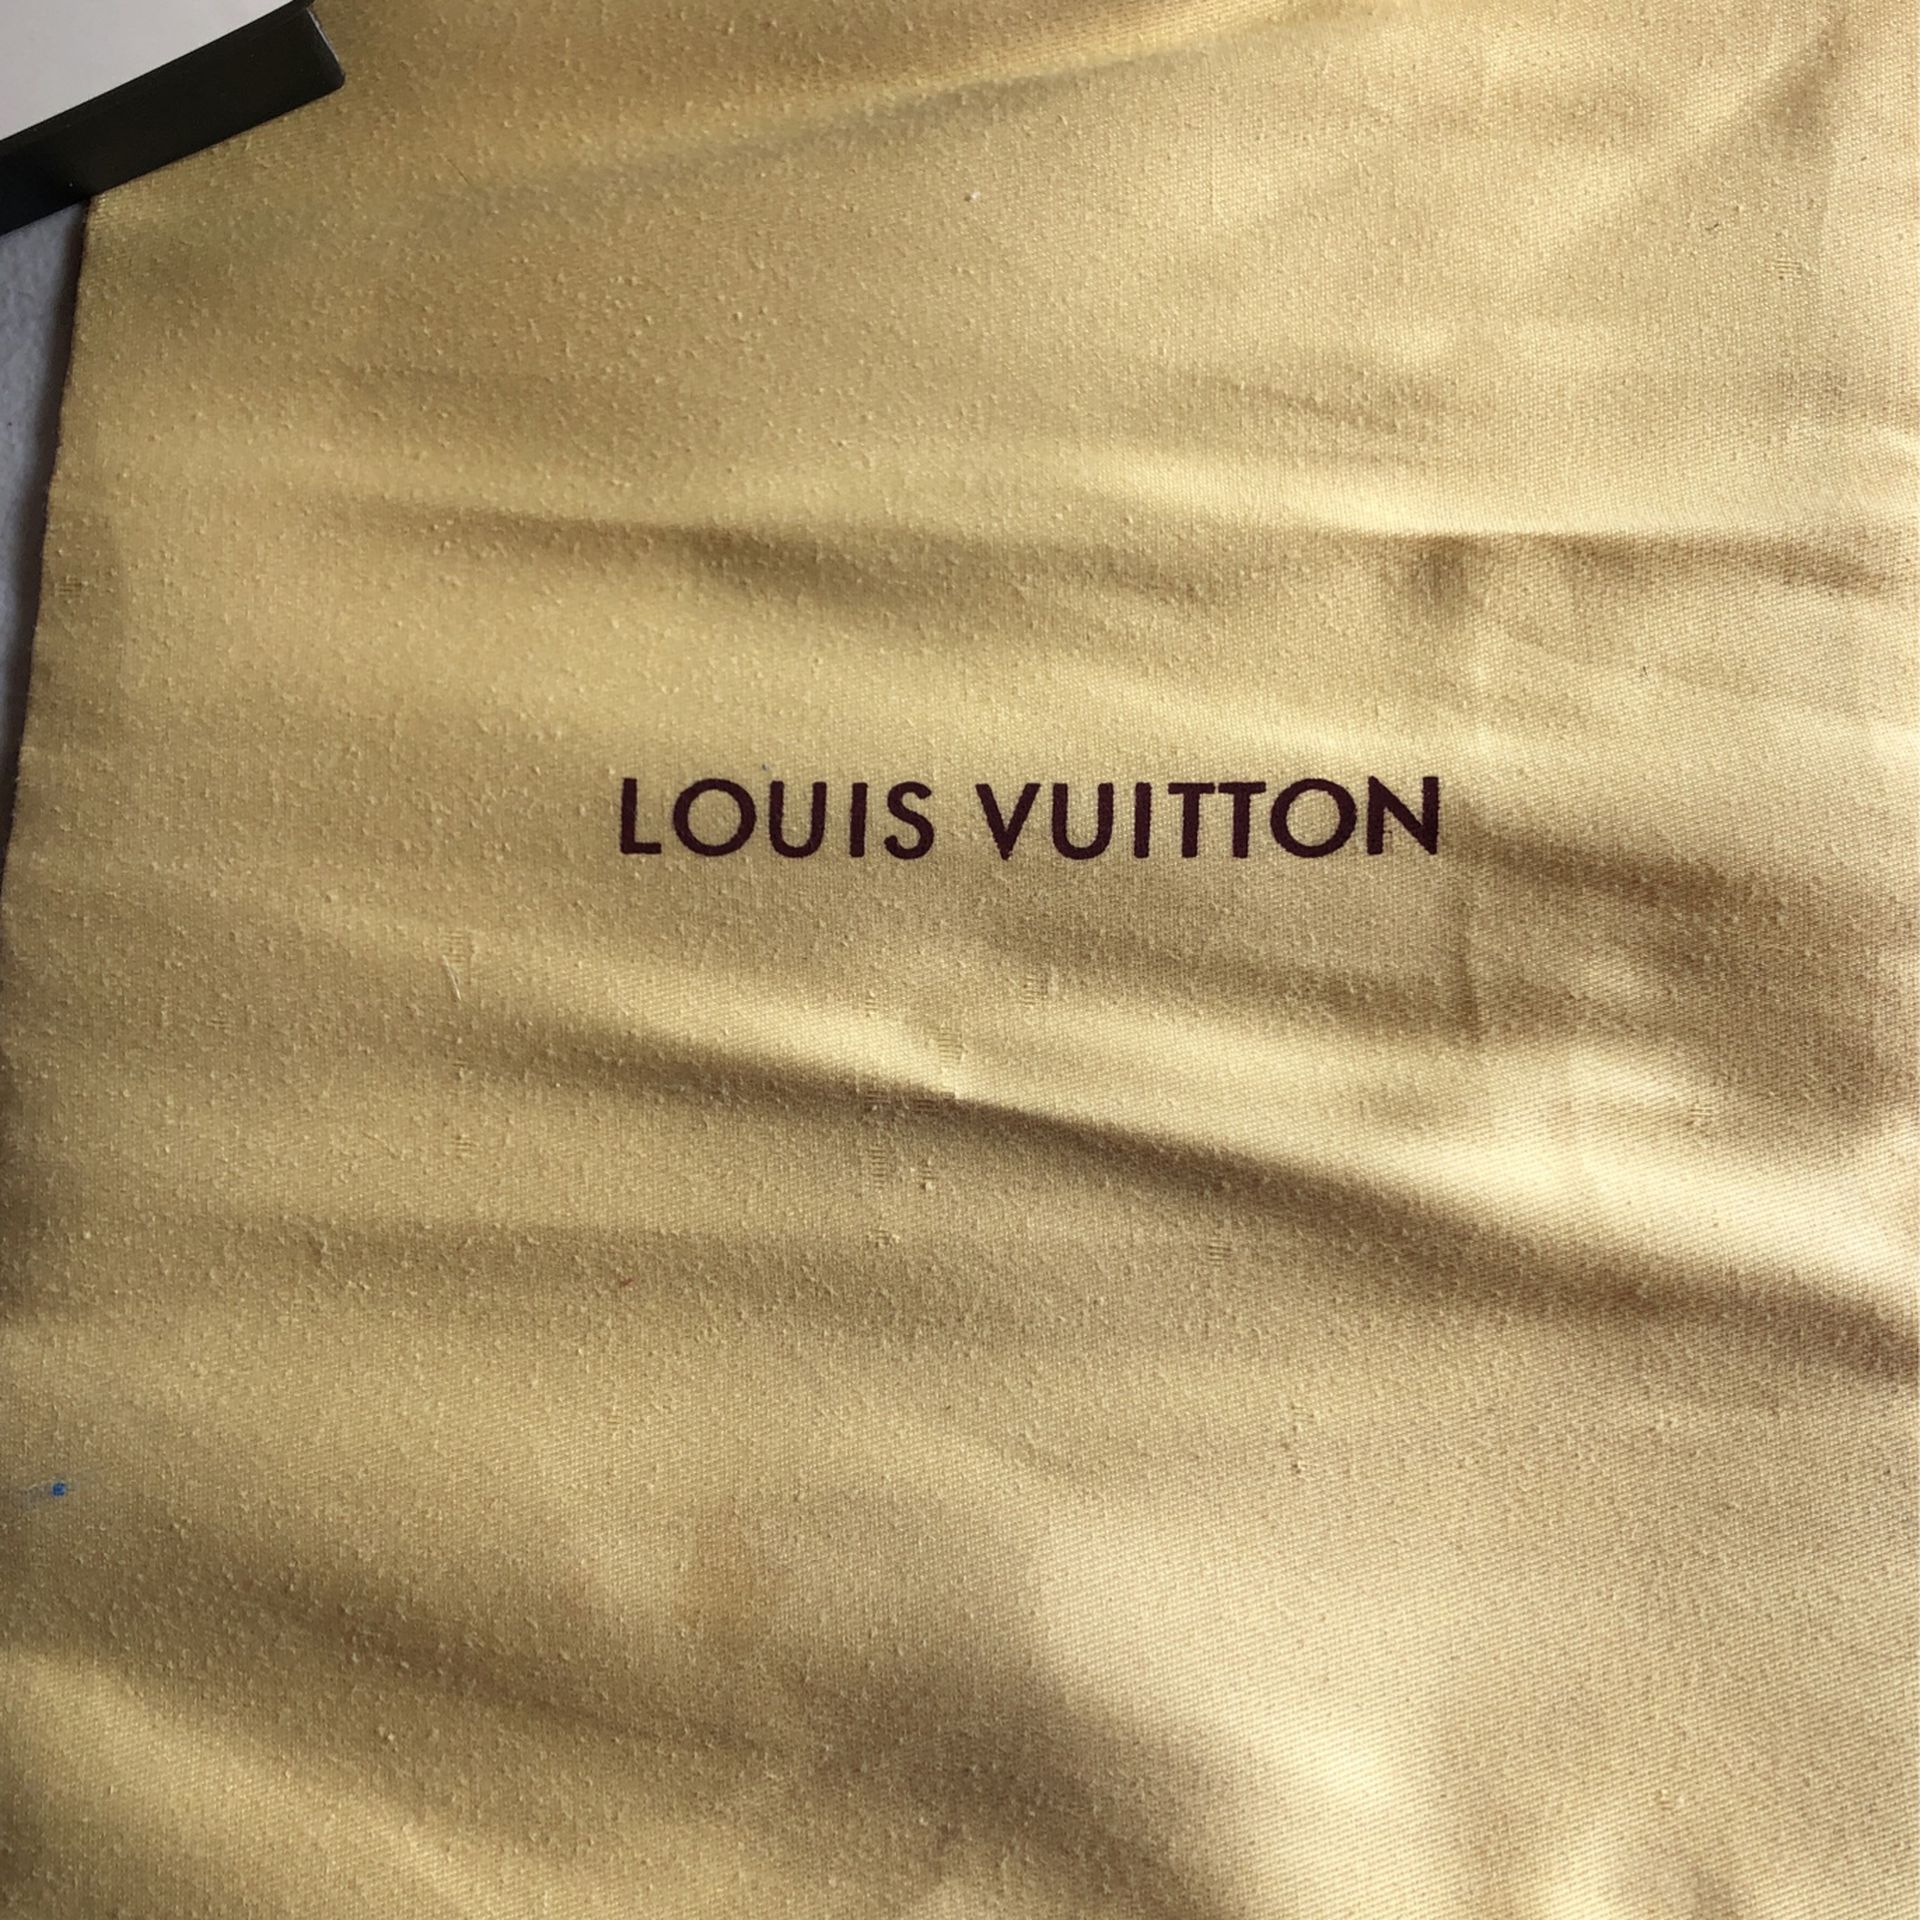 Chanel, Vuitton Boxes And Bag (3)pcs